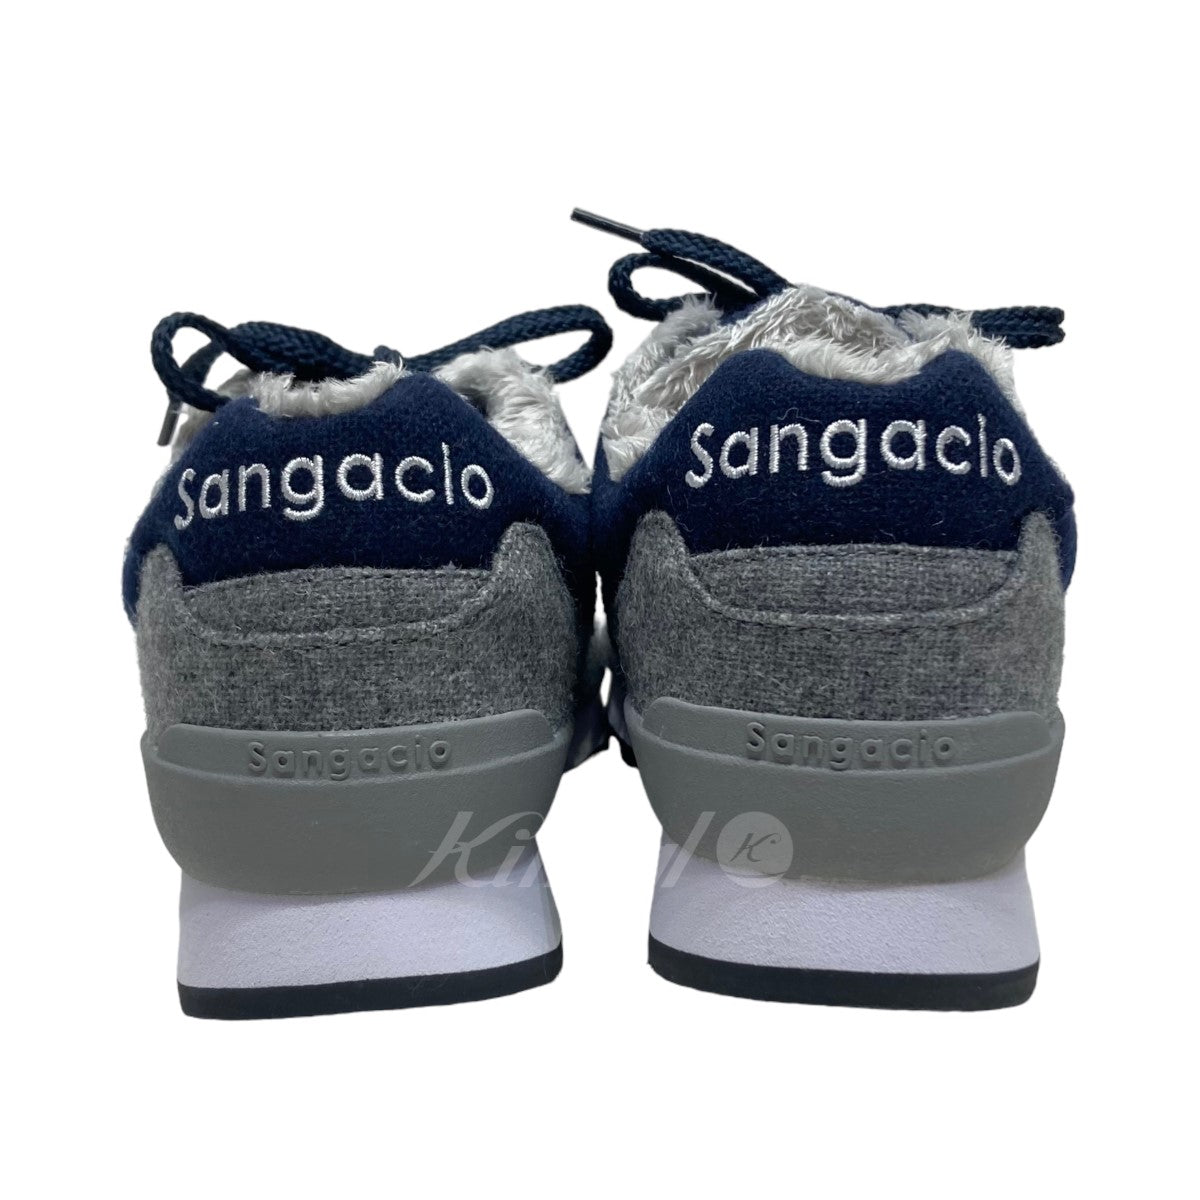 sangacio(サンガッチョ) スニーカー【値下げ】 グレー×ネイビー サイズ 